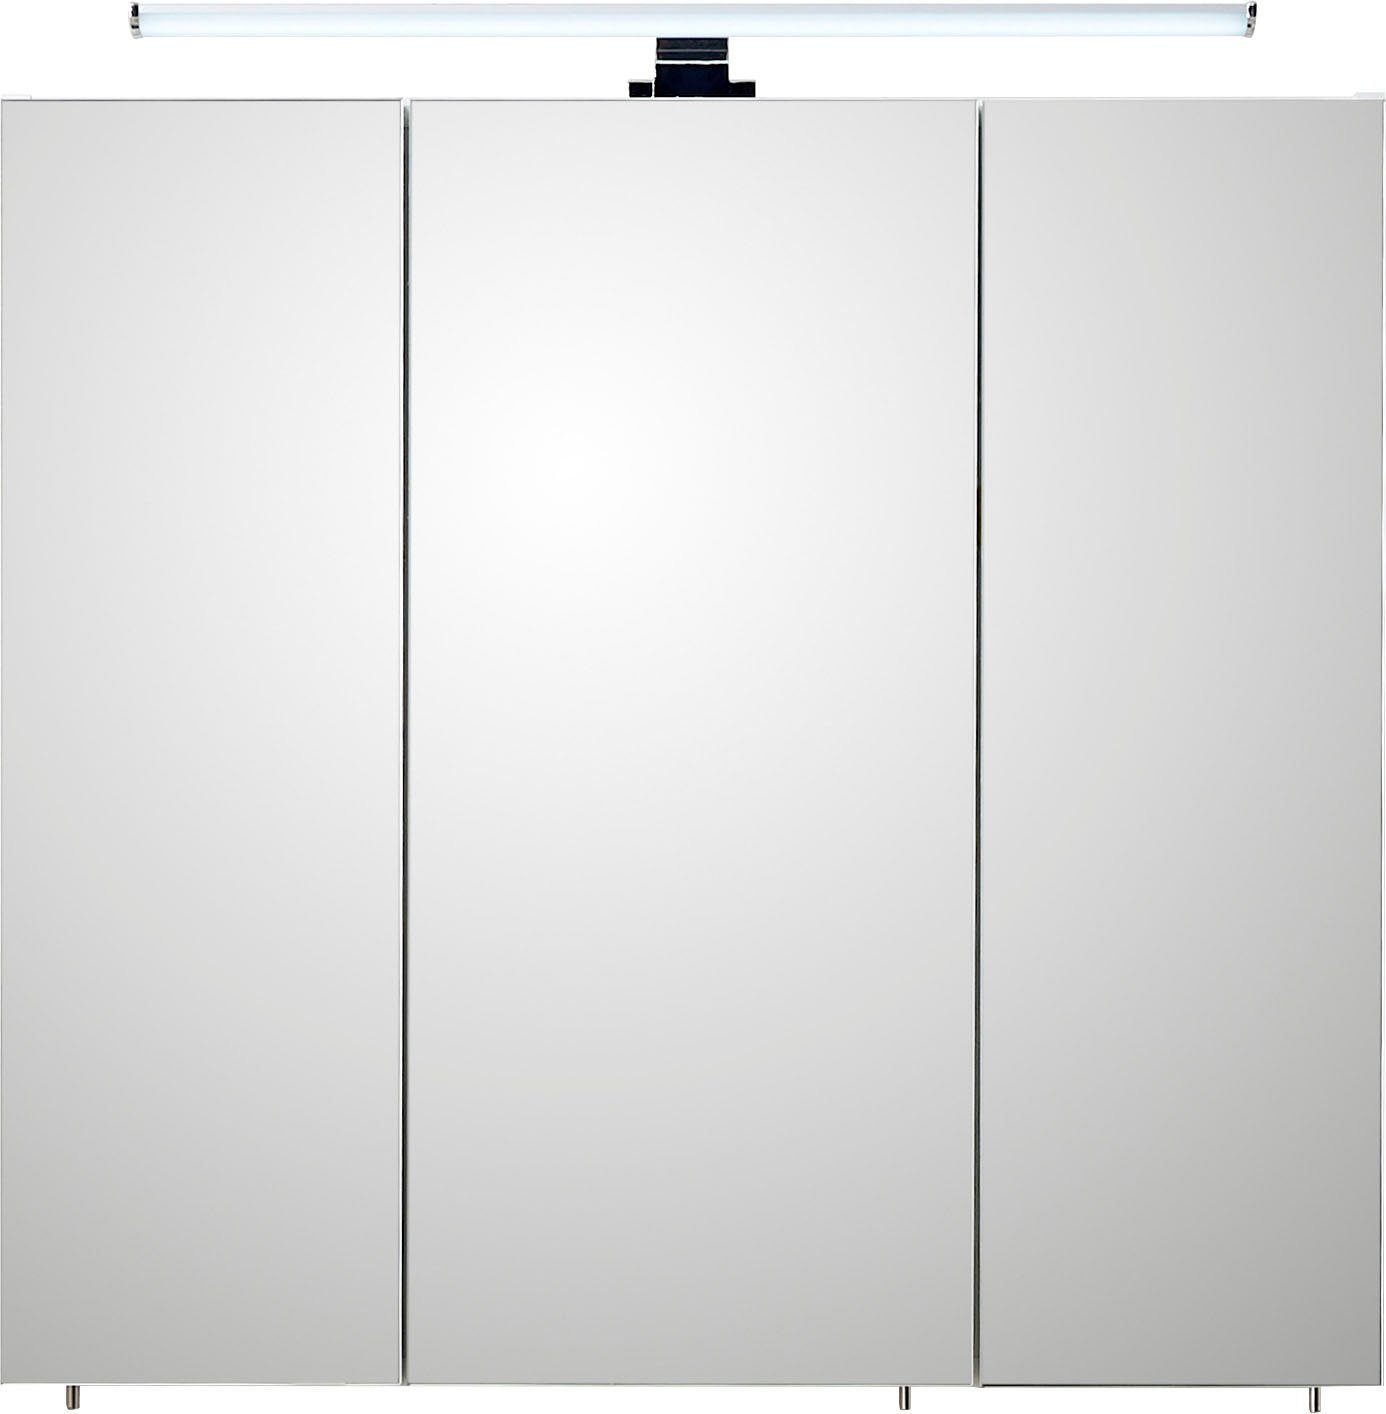 75 cm, Quickset 3-türig, PELIPAL Schalter-/Steckdosenbox Spiegelschrank 360 LED-Beleuchtung, Breite